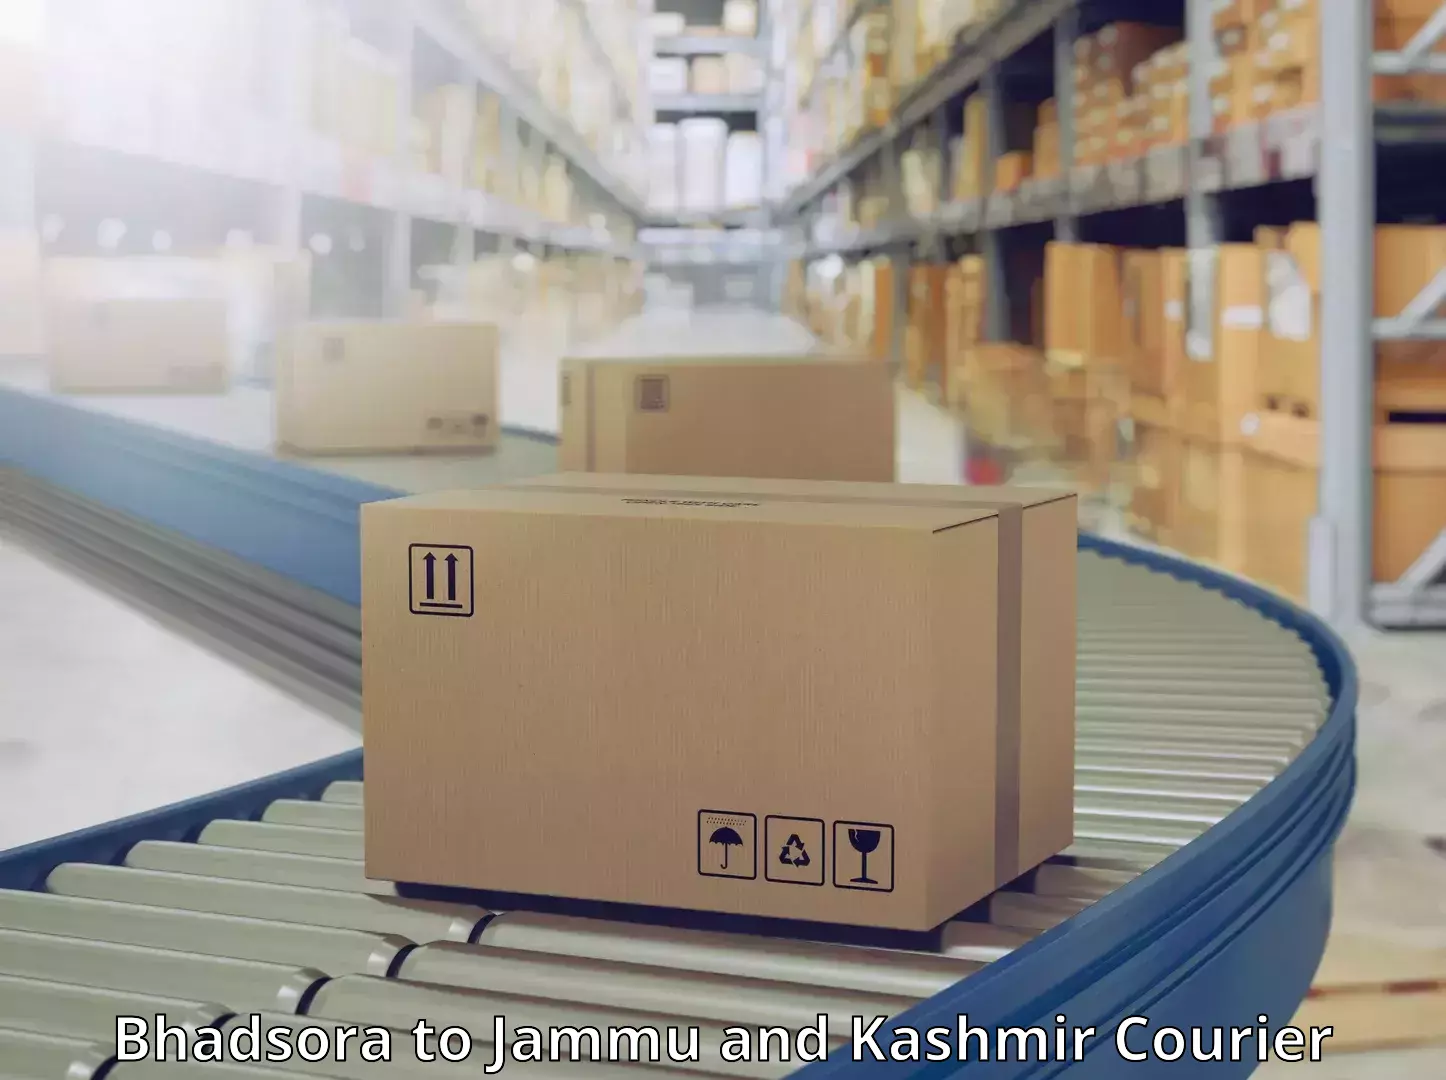 Express logistics providers Bhadsora to Jammu and Kashmir